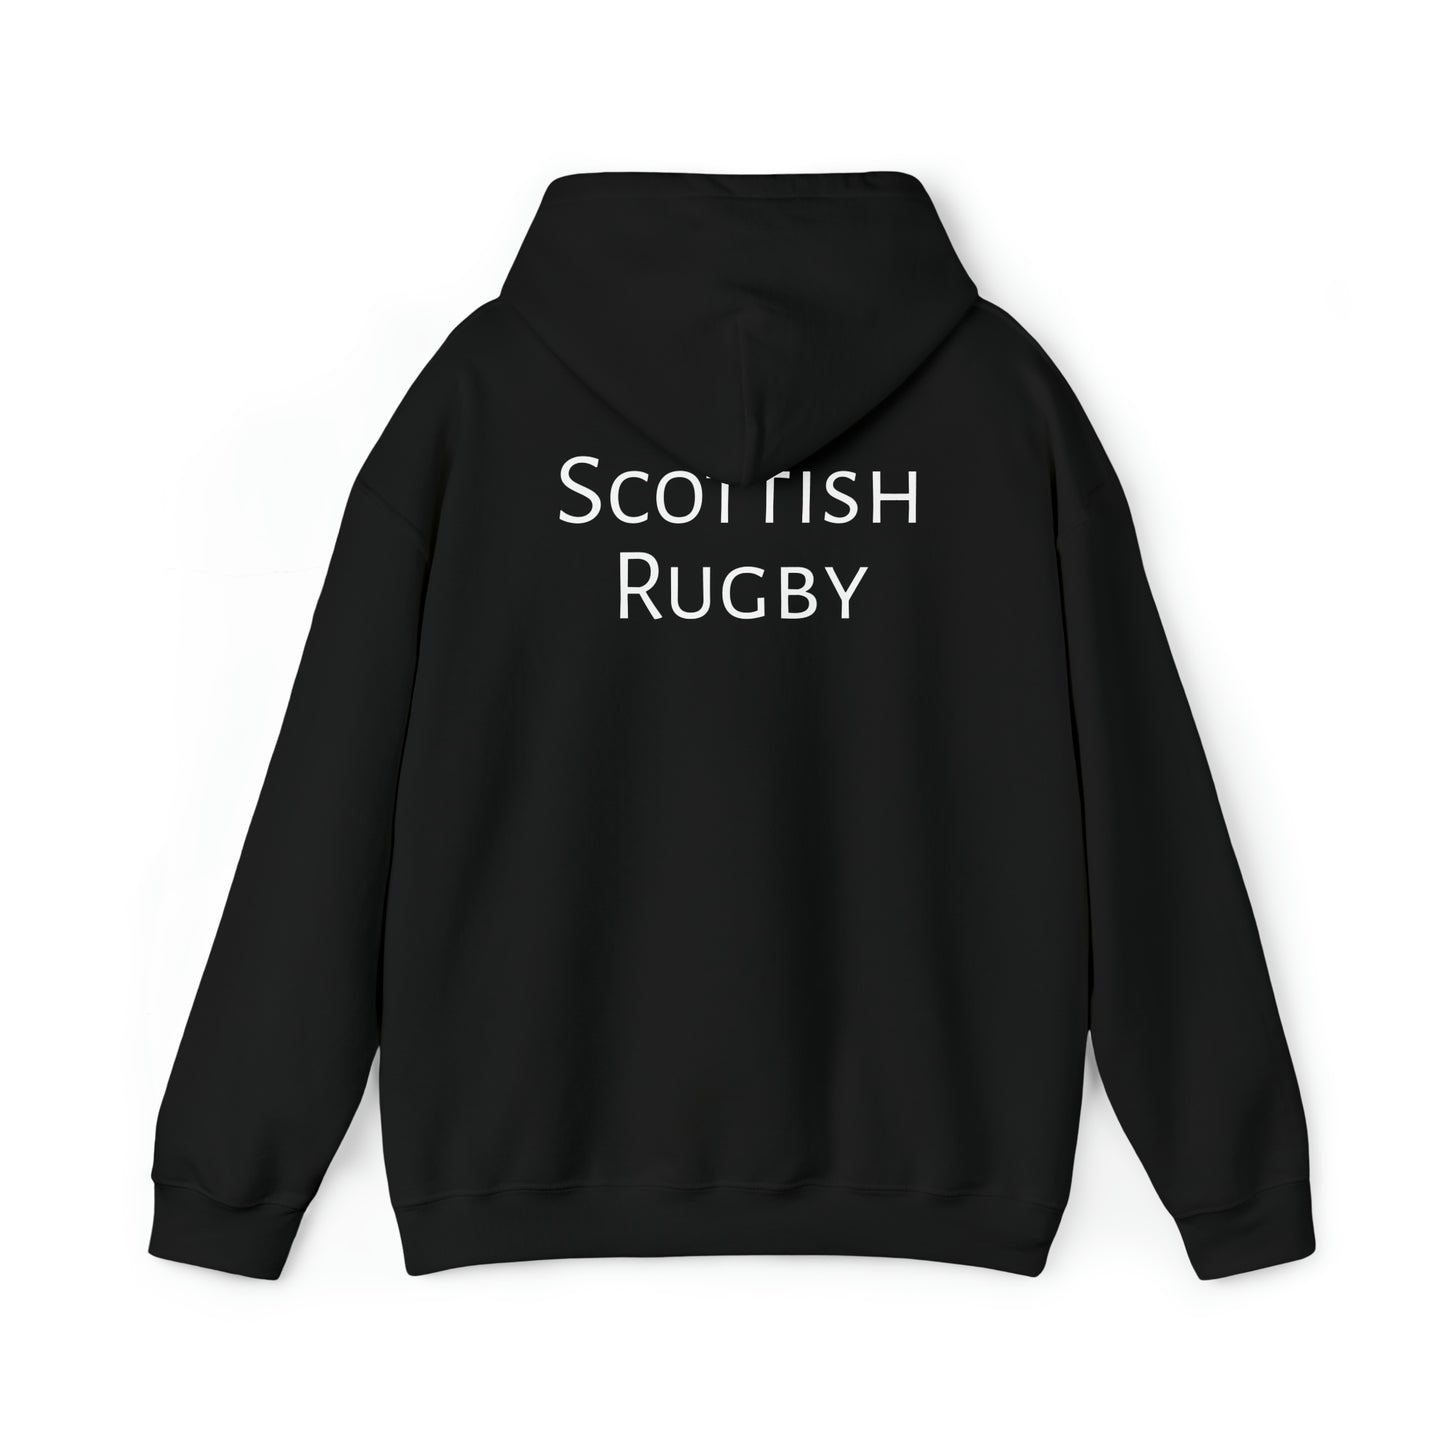 Post Match Scotland - dark hoodies